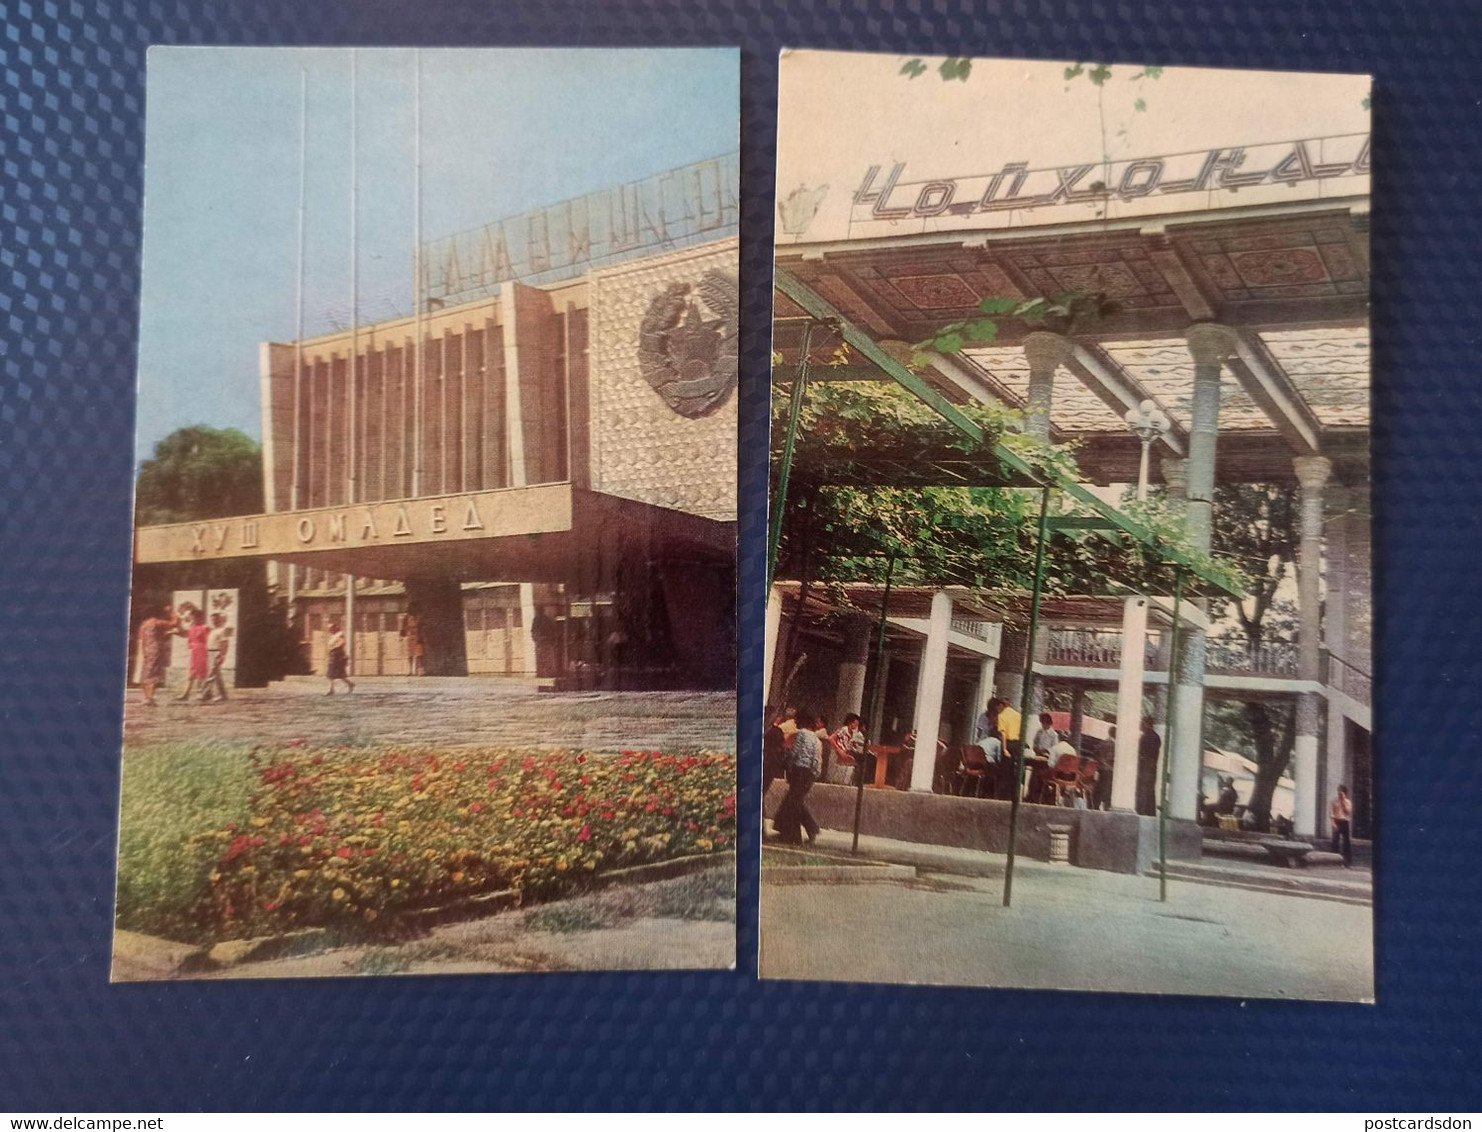 TAJIKISTAN  Dushanbe  Capital.  12 Postcards Lot  - Old USSR Postcard  - 1970s Lenin Monument - Tadschikistan